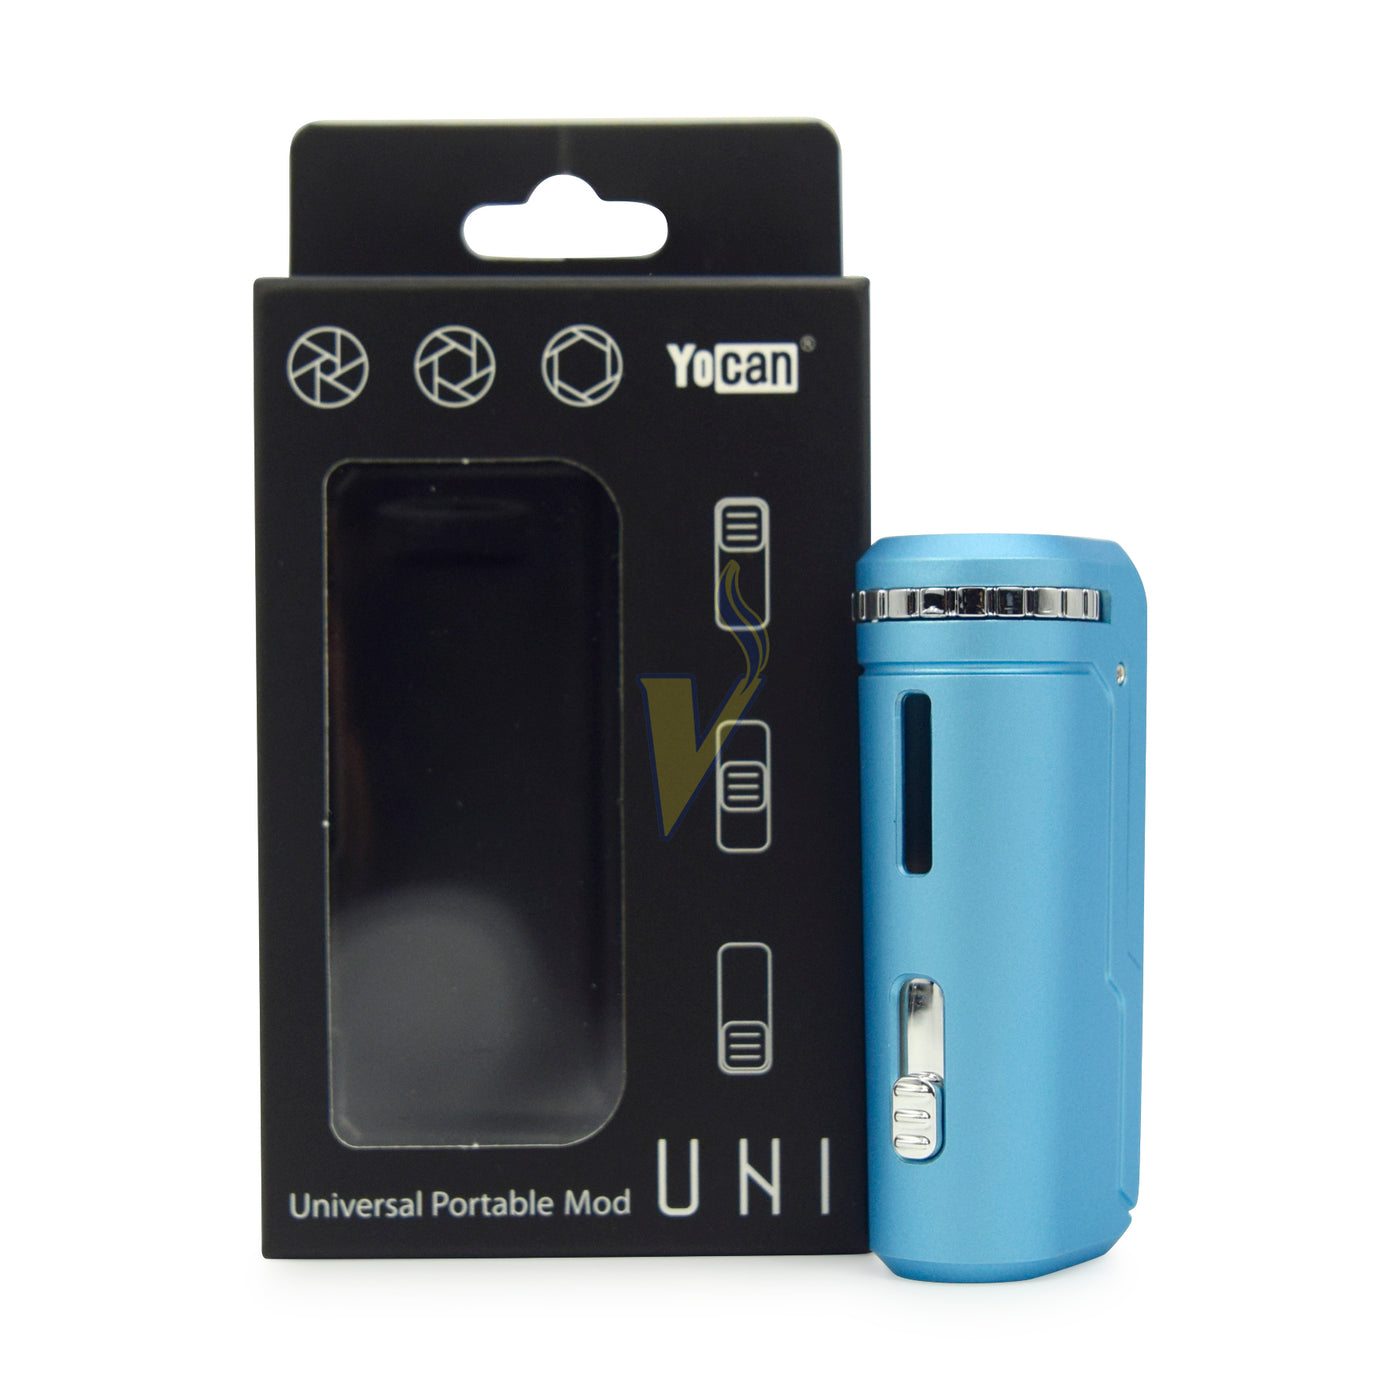 Yocan Uni Universal Carto Battery Mod